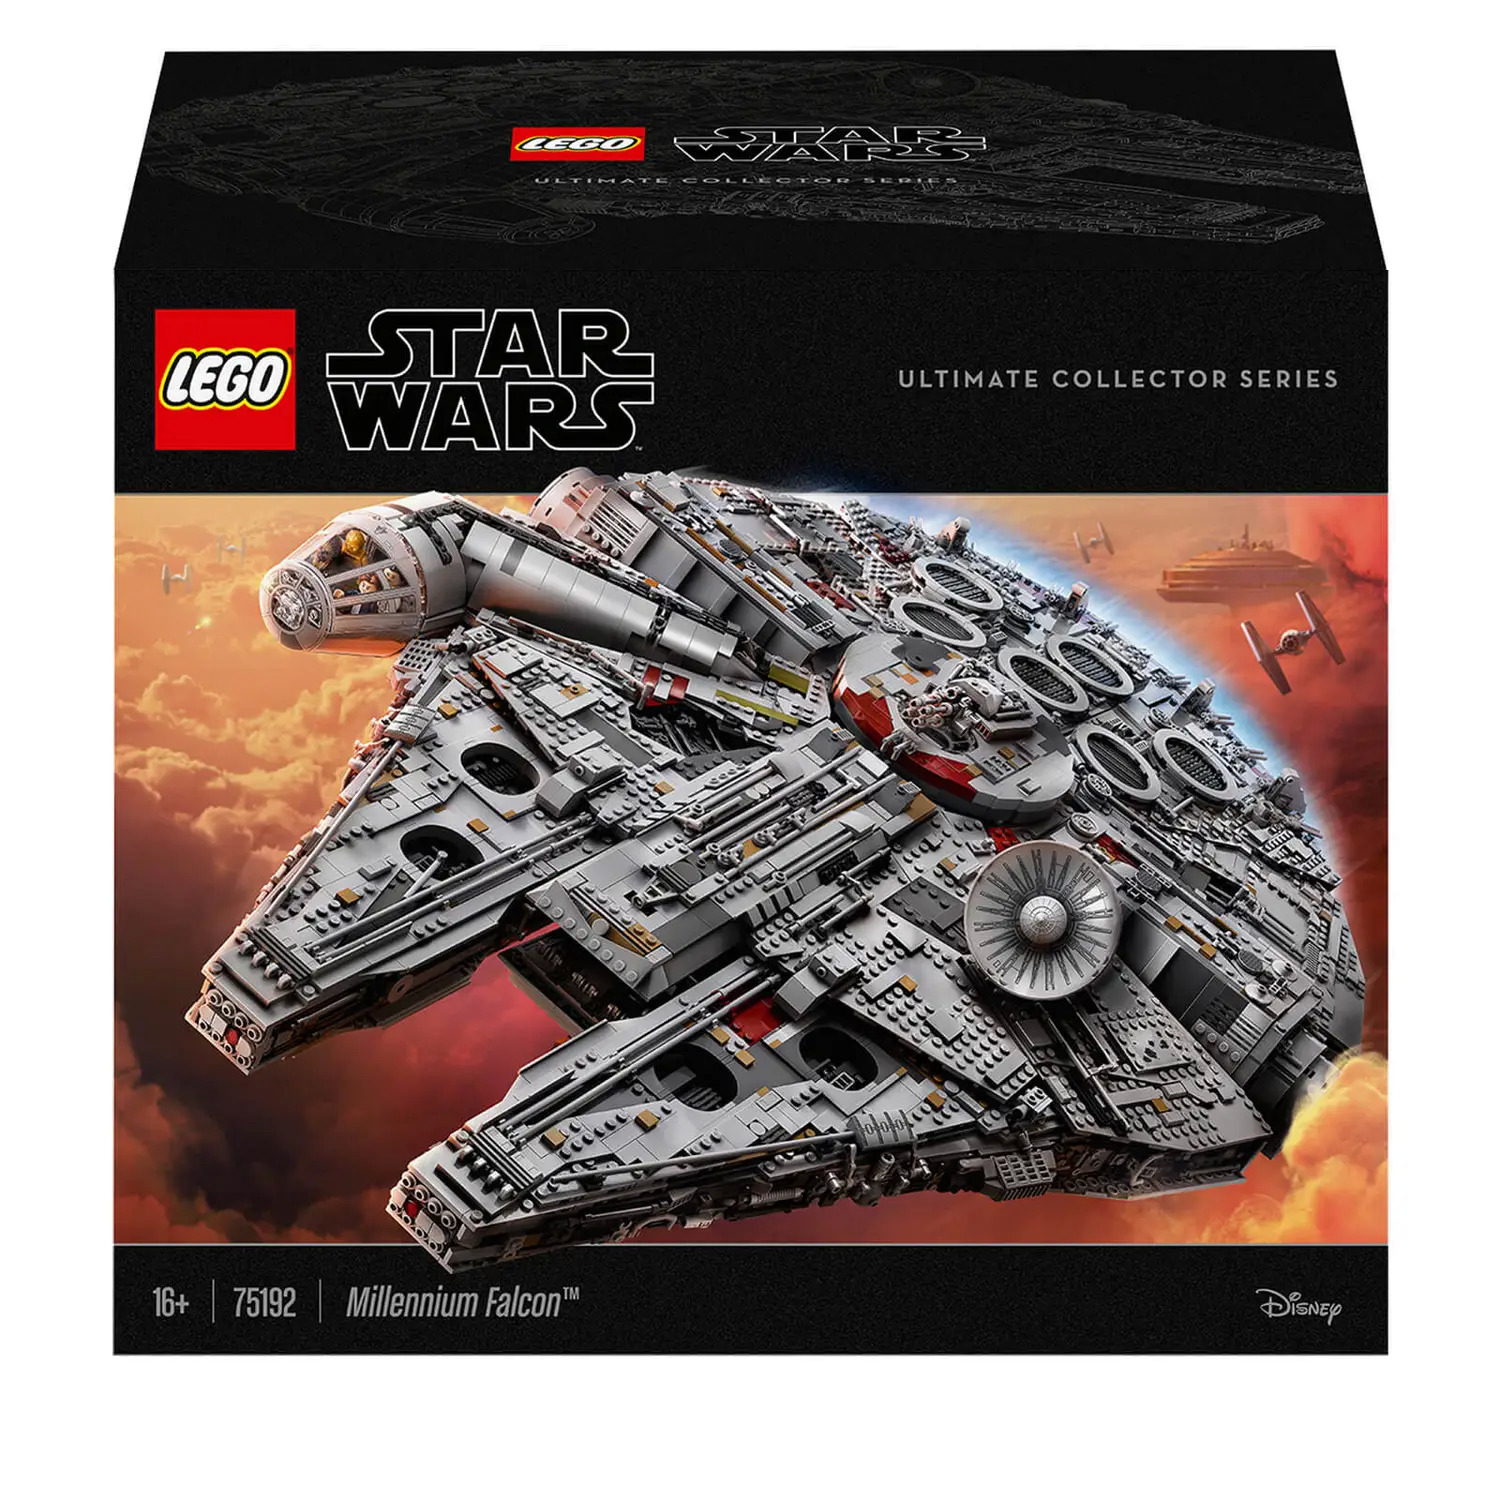 7,541-Piece LEGO Star Wars Millennium Falcon Collector Series Building Set $700